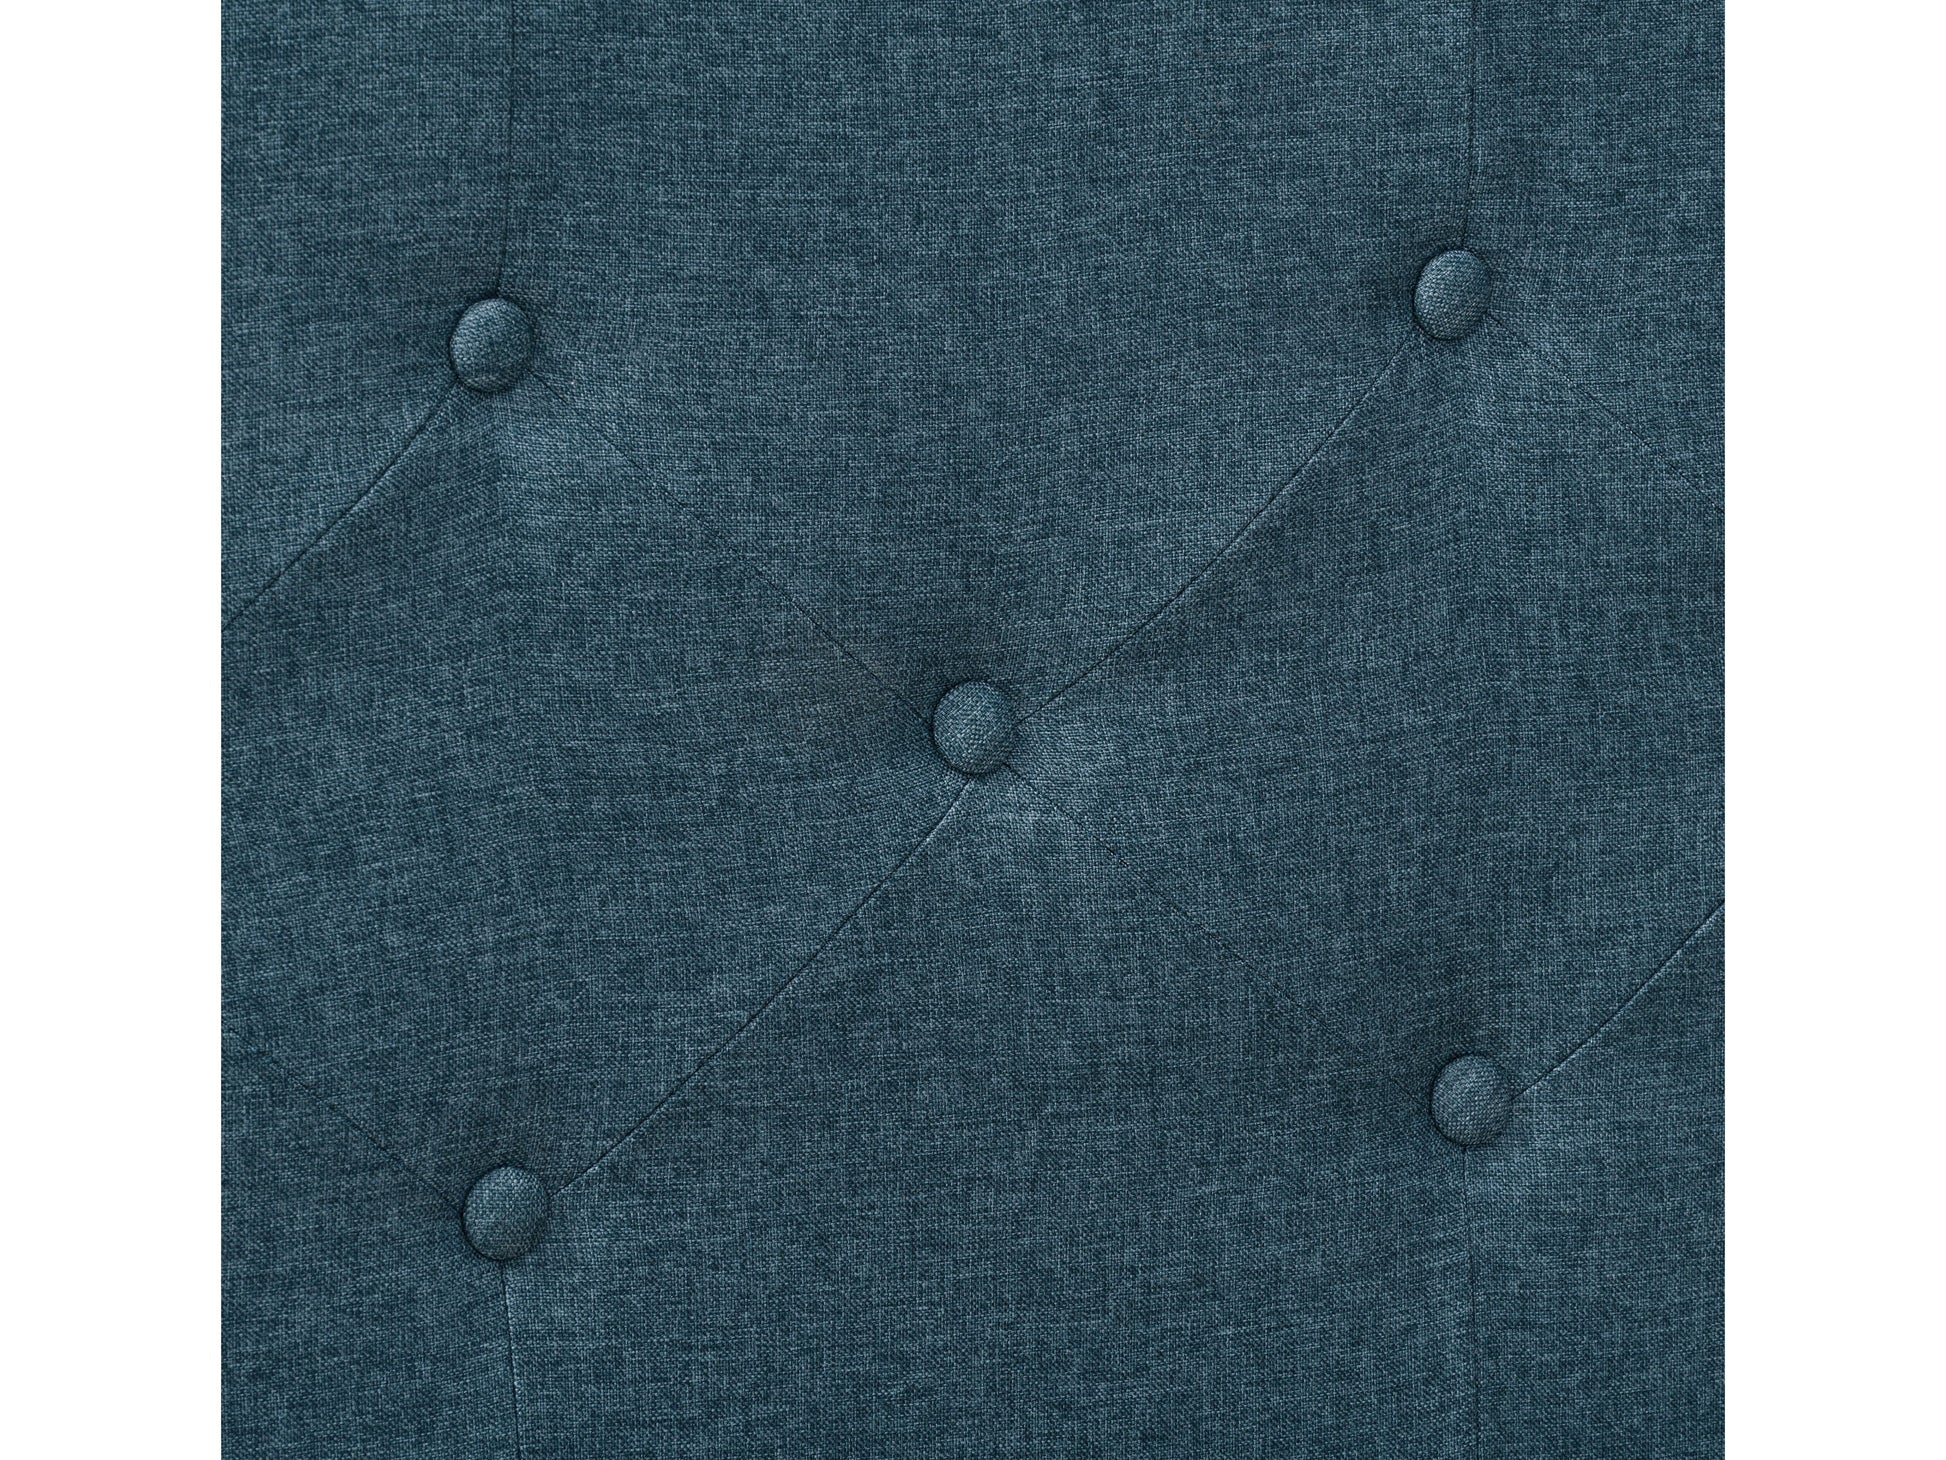 ocean blue Button Tufted Queen Bed Nova Ridge Collection detail image by CorLiving#color_nova-ridge-ocean-blue